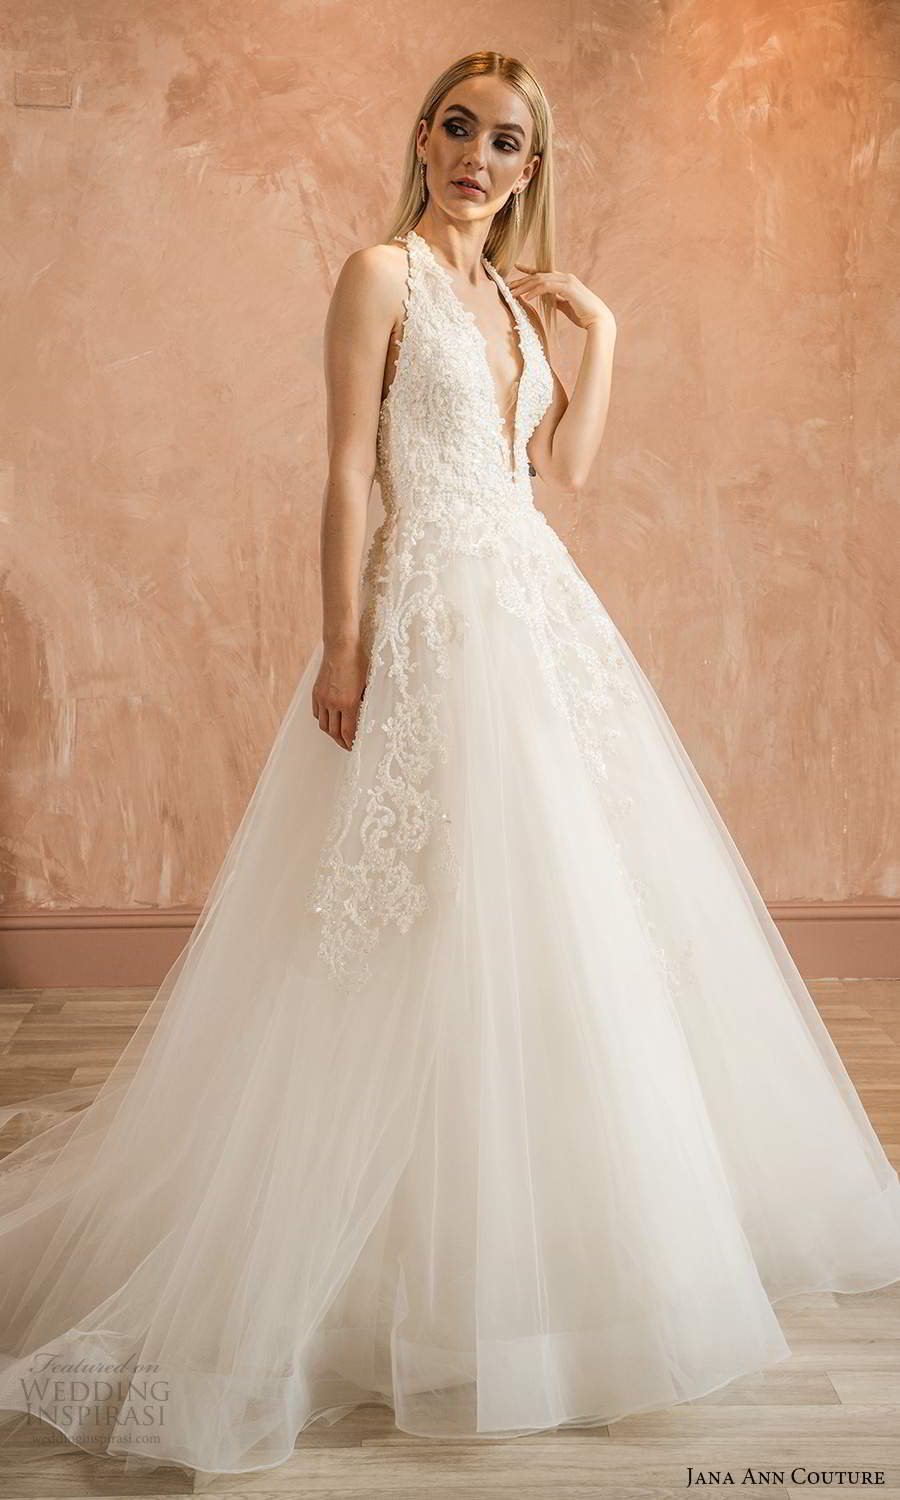 jana ann couture 2021 bridal sleeveless halterneckline plunging v neckline embellished bodice a line ball gown wedding dress chapel train (19) mv